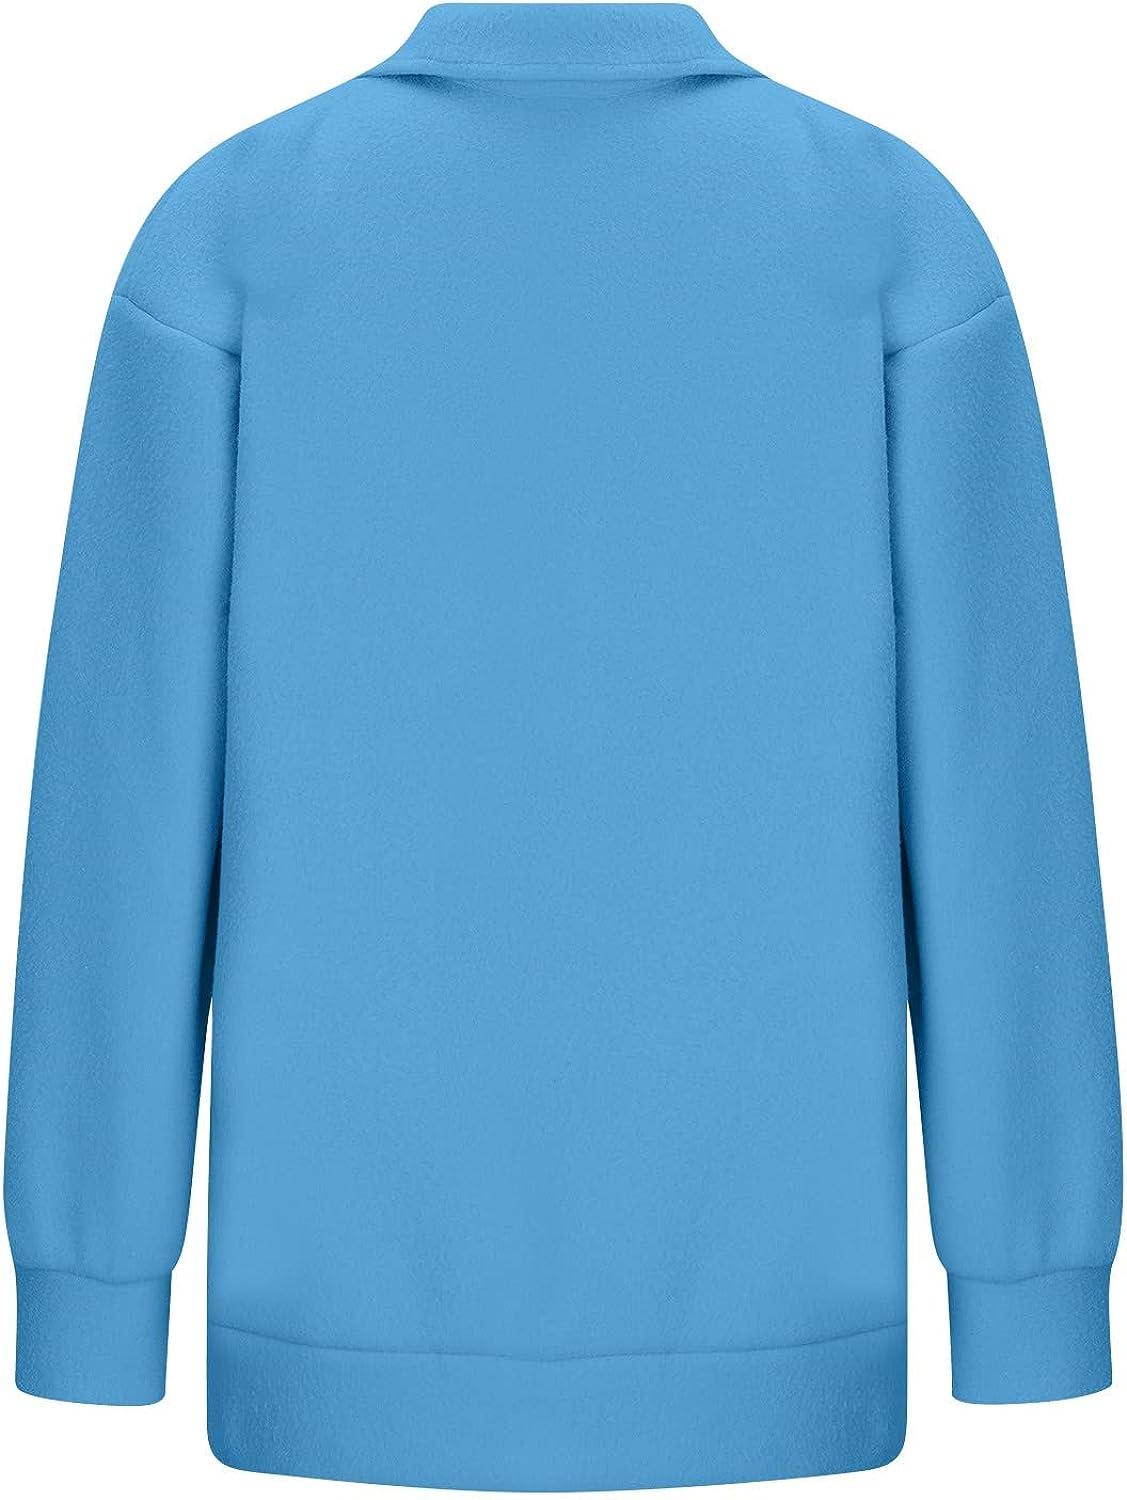 Half Neck Thumbhole Cuff Pullover Sweatshirt Women's Oversized